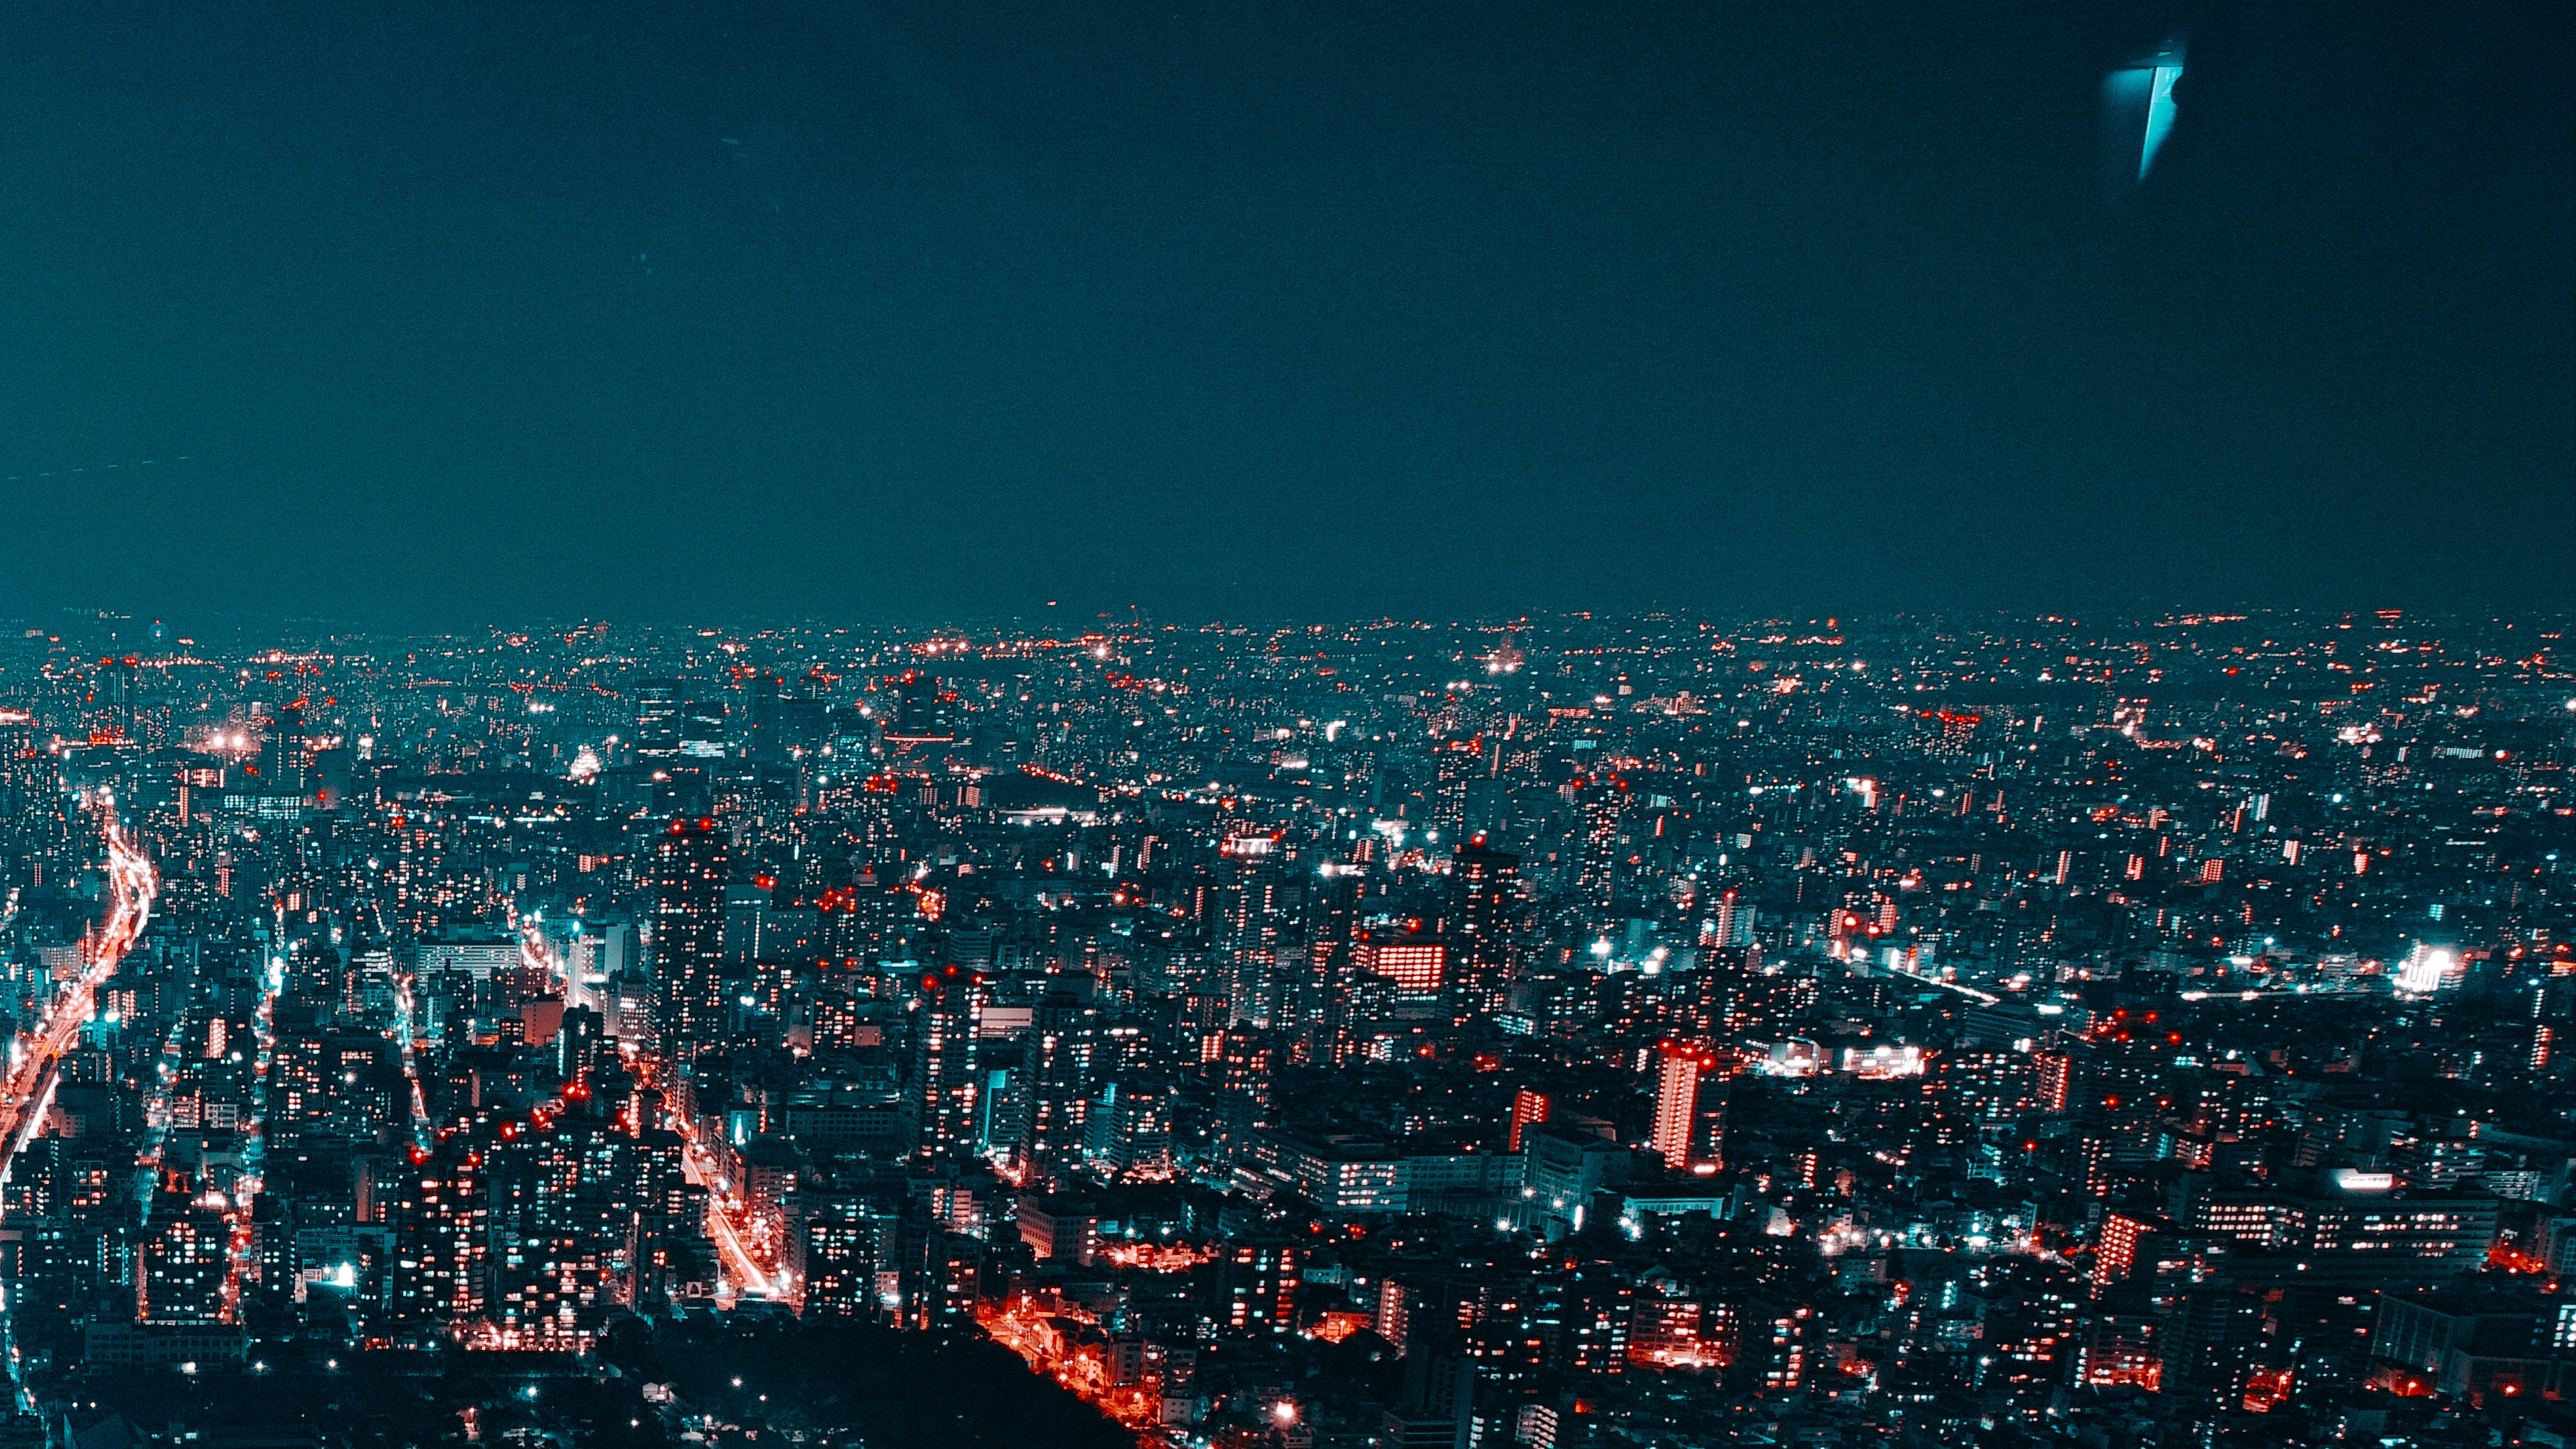 ᴴ あべのハルカス展望台から Tealandorange で少しsfな大阪の広角夜景 高画質に再現像 Foveon Dp0quattro Sigma T Co 7cqpgxzlsq Twitter